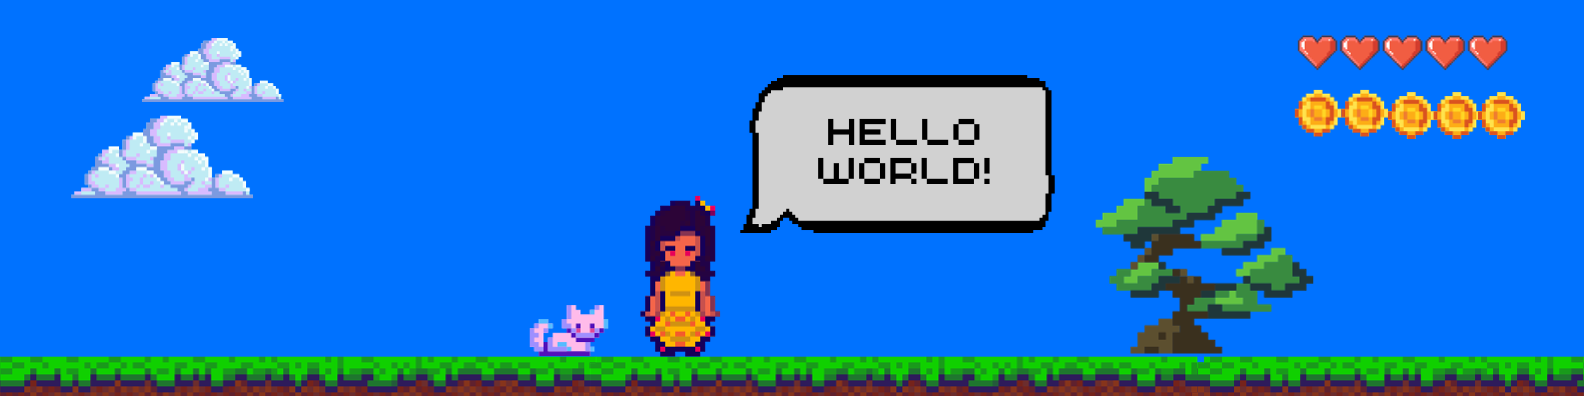 Banner estilo pixel art com a frase Hello World